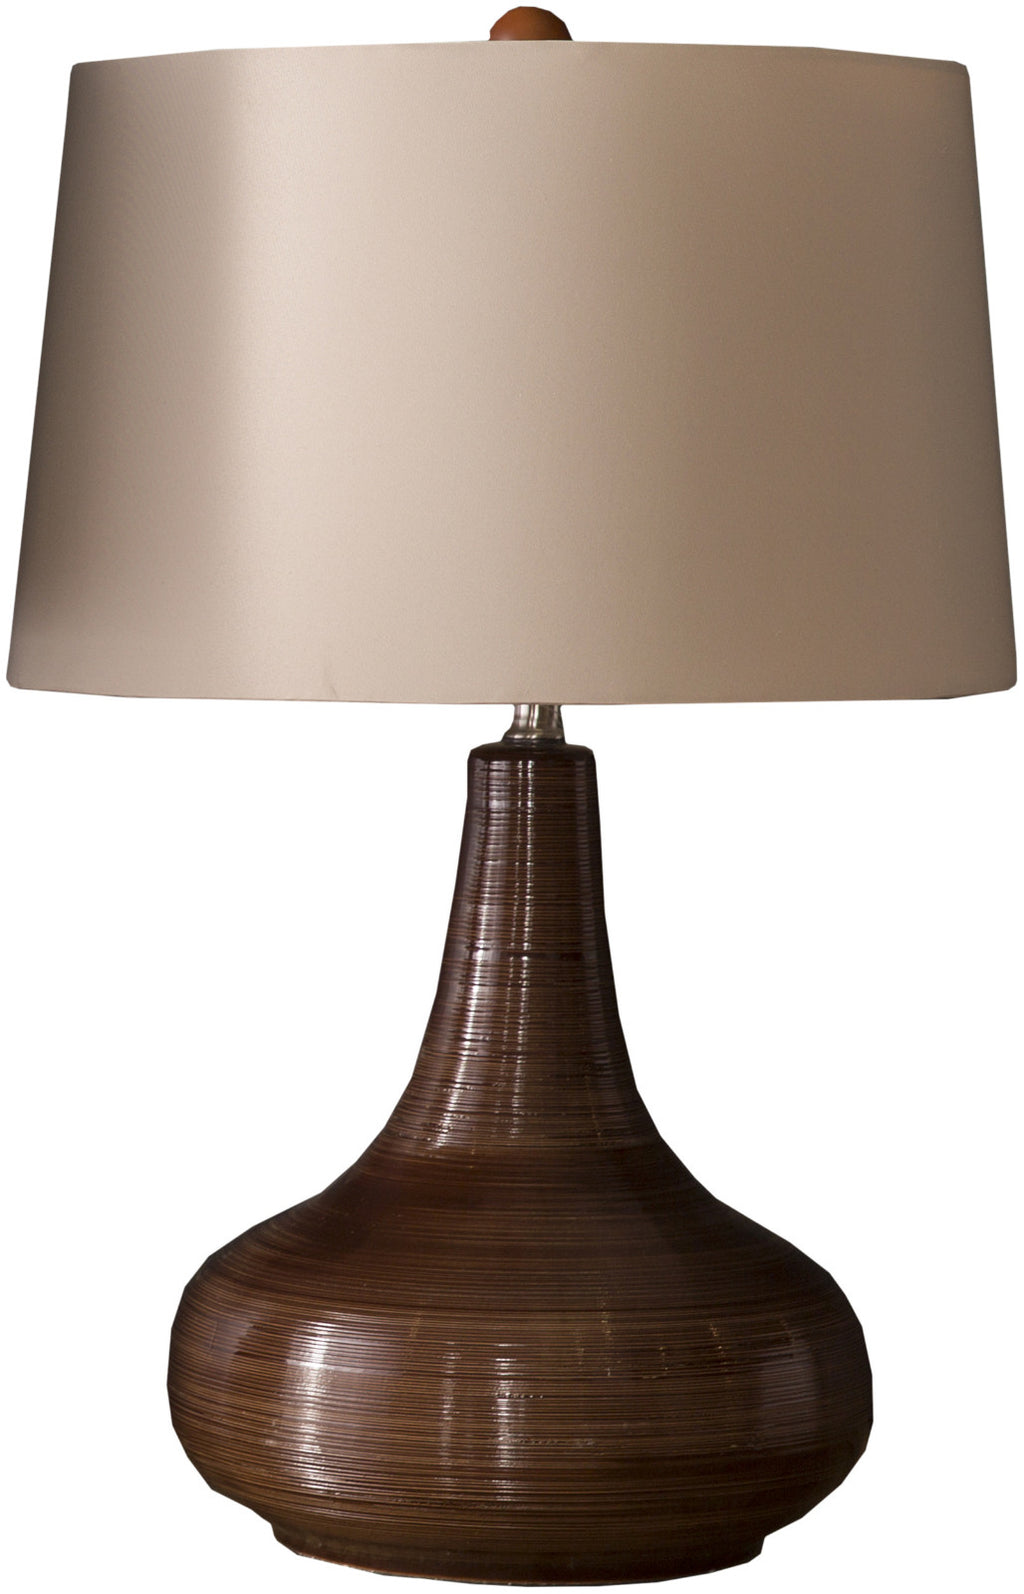 Surya Sicily STL-3001 Beige Lamp Table Lamp